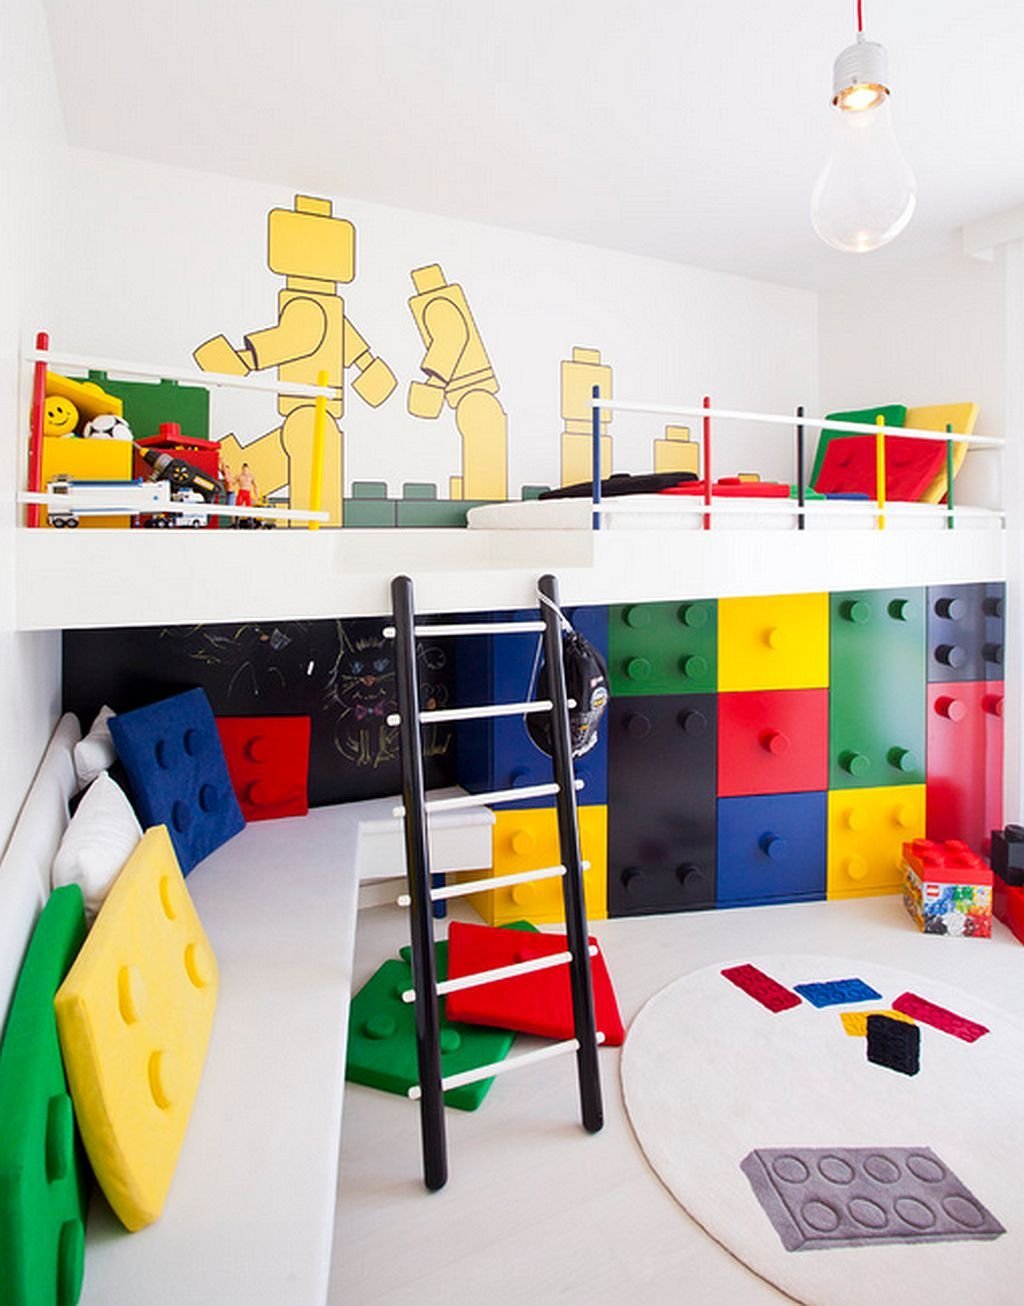 LEGO Playroom мебель